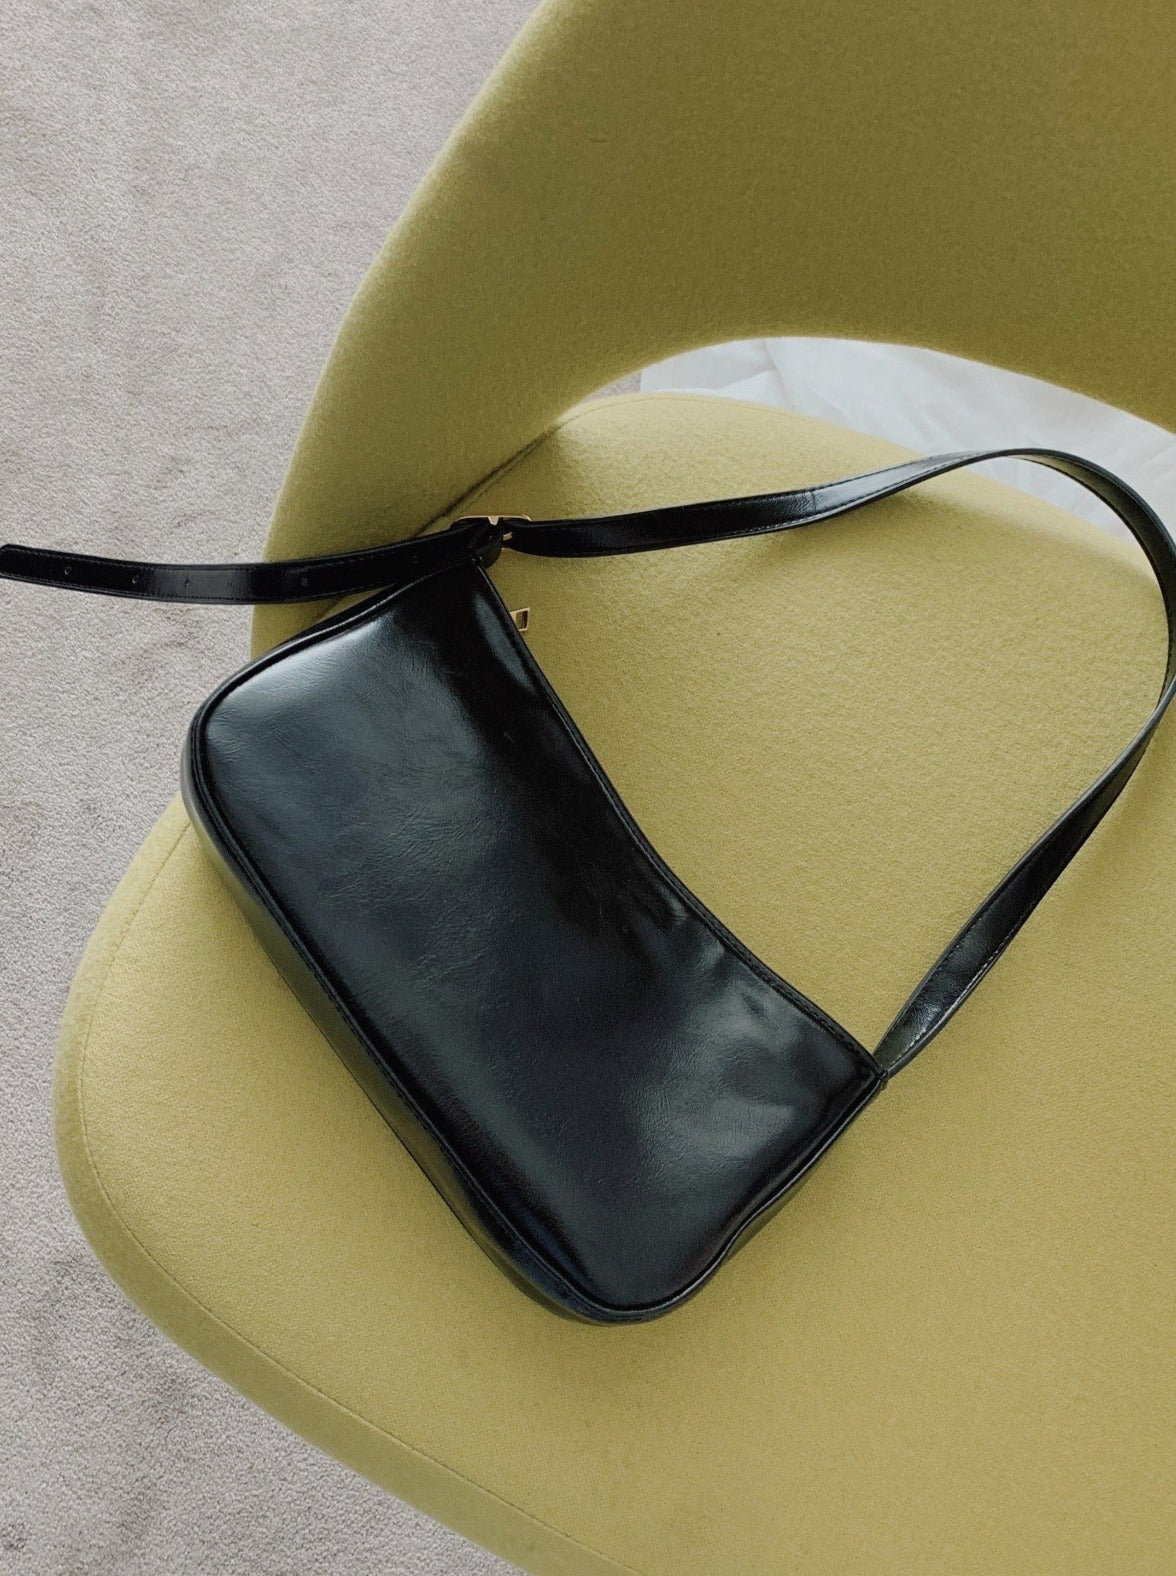 Black Leather Crossbody Bag Minimalist Crossbody Bag Black 